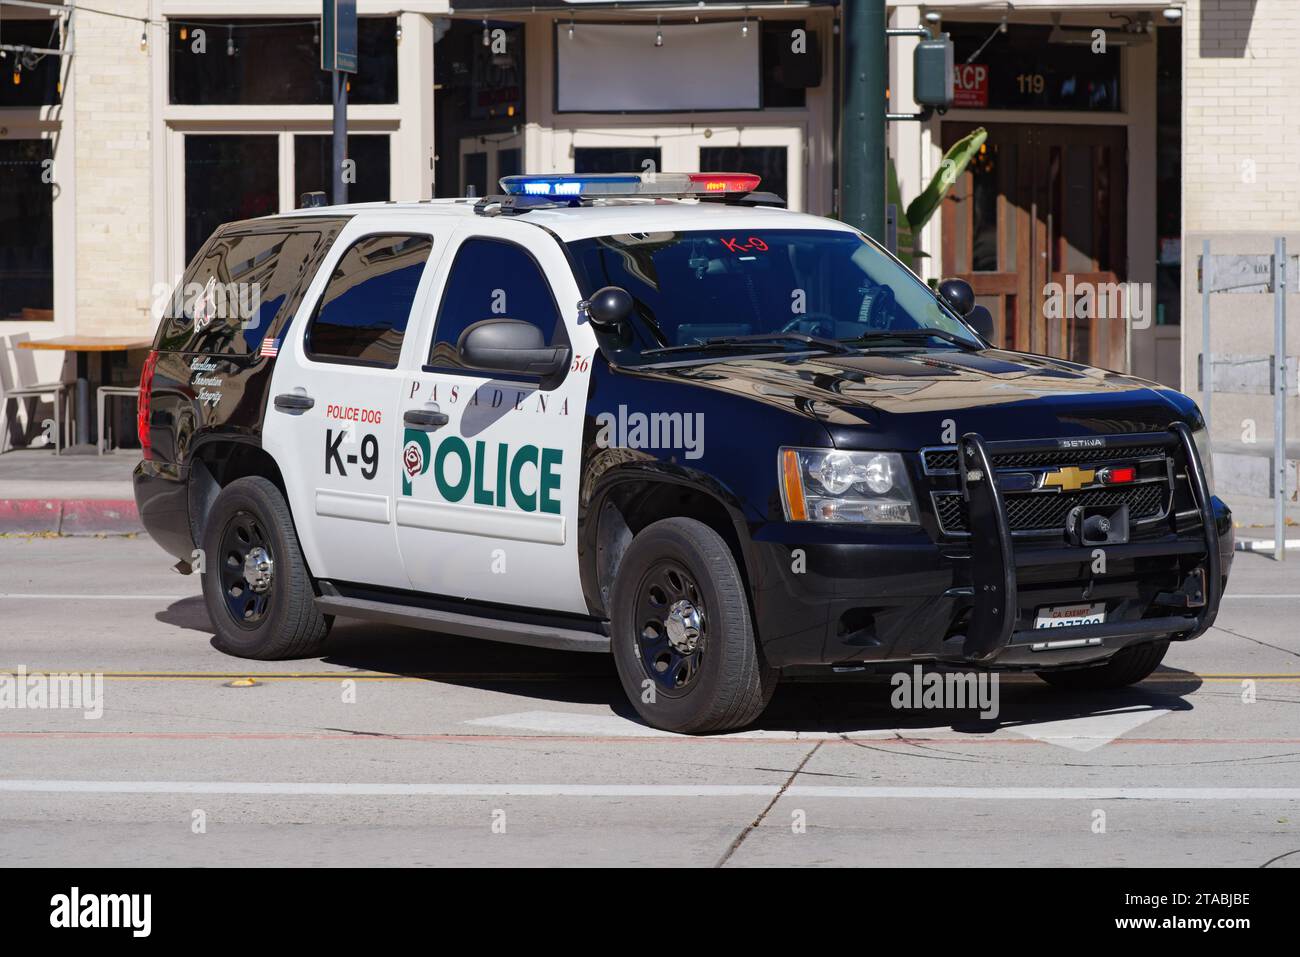 Pasadena Police Department vehicle, K-9 Dog Unit, shown stationary on a street blocking traffic. Stock Photo